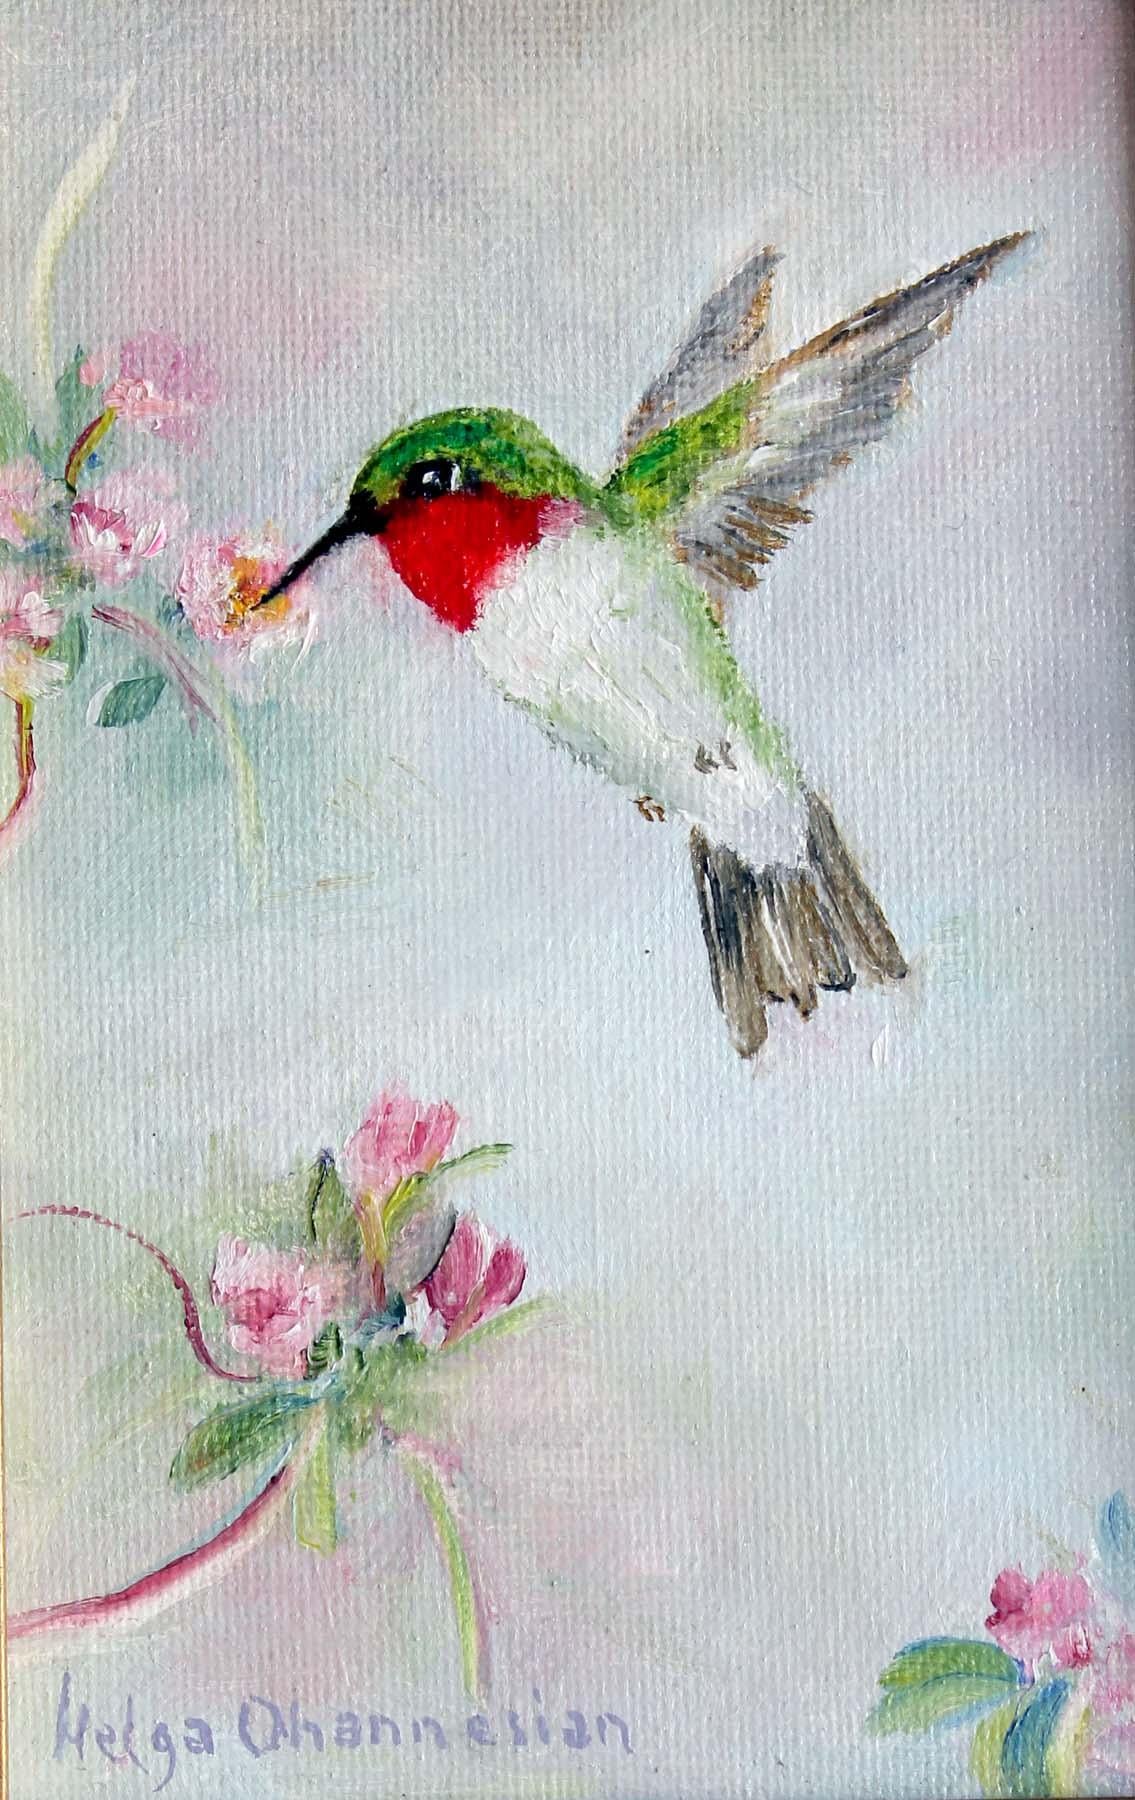 Helga Ohannesian Animal Painting - Wings and Vines, Hummingbird.